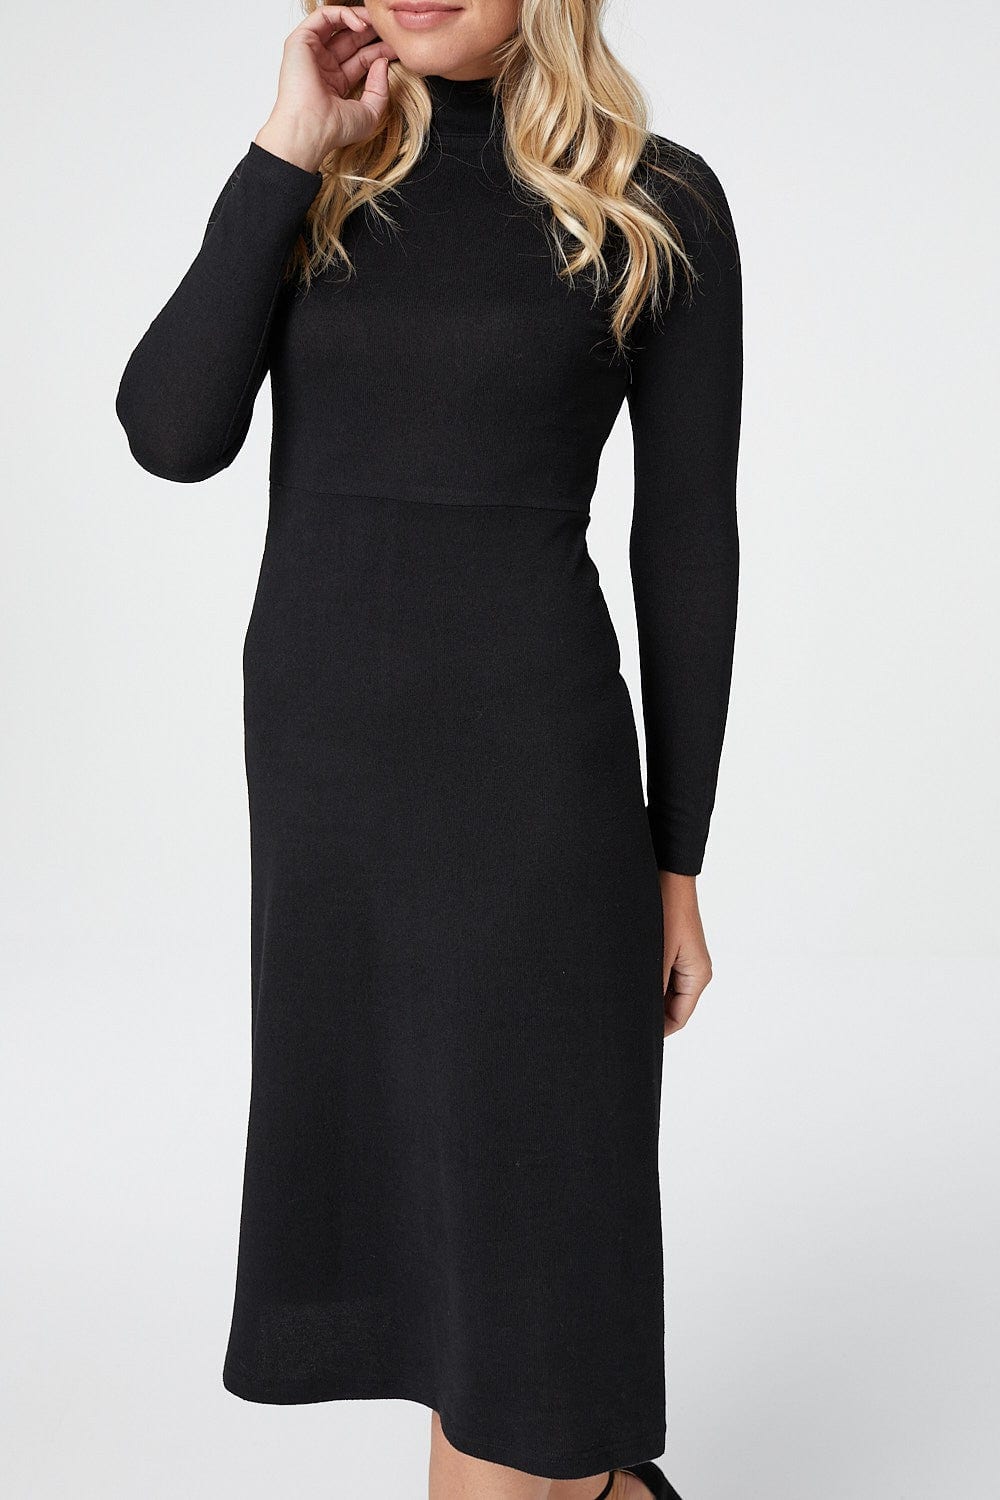 Black | Long Sleeve Turtleneck Dress